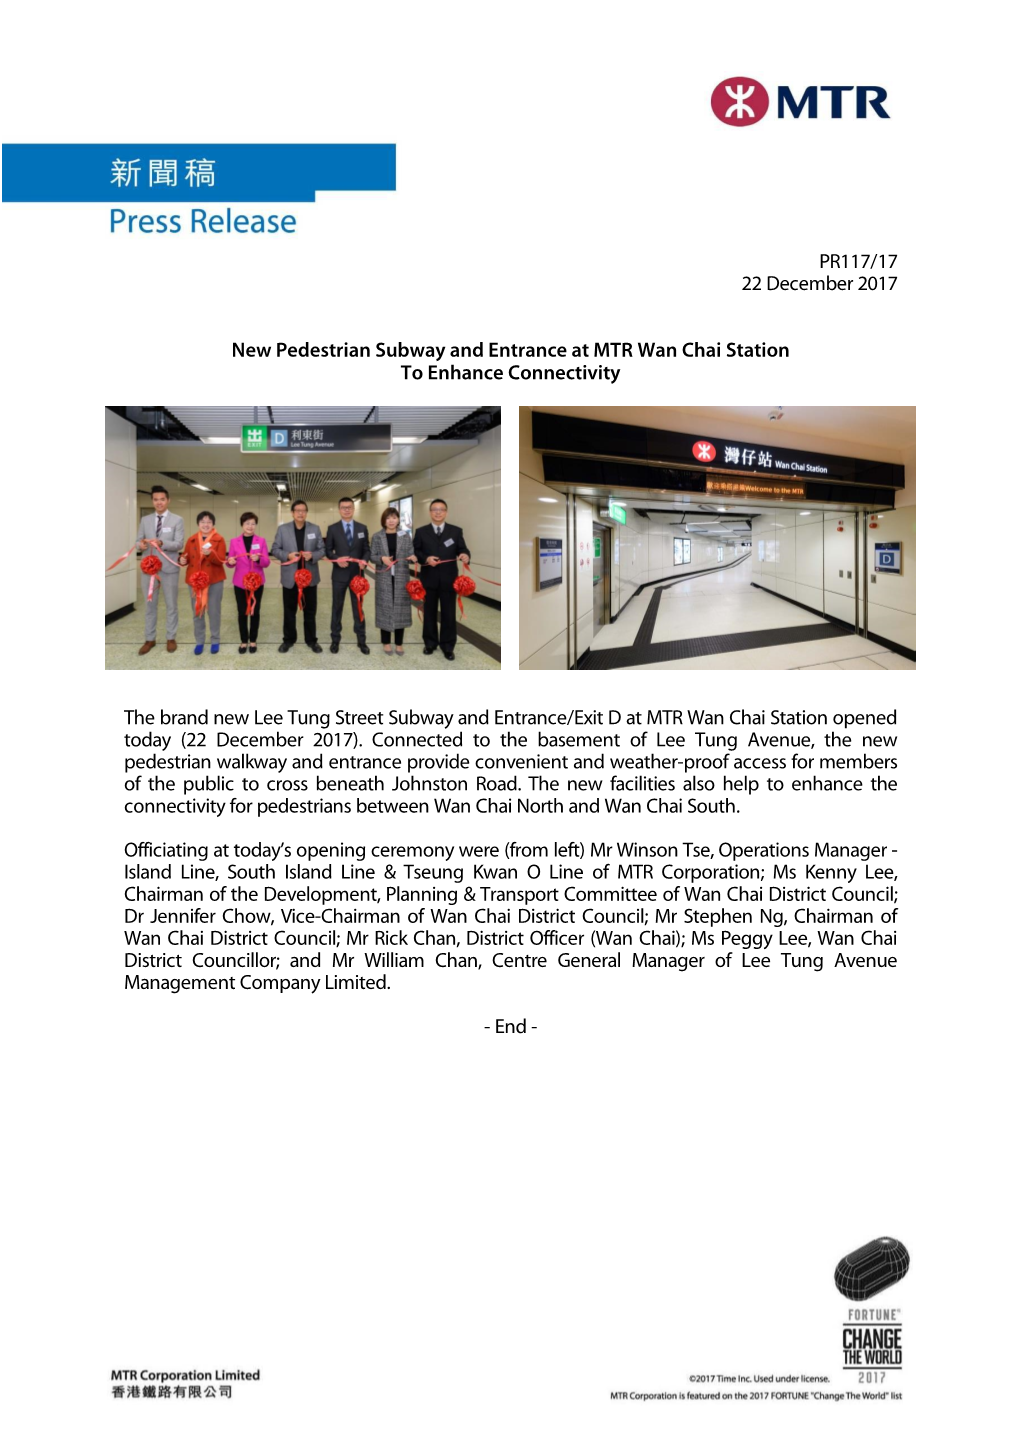 PR117/17 22 December 2017 New Pedestrian Subway And